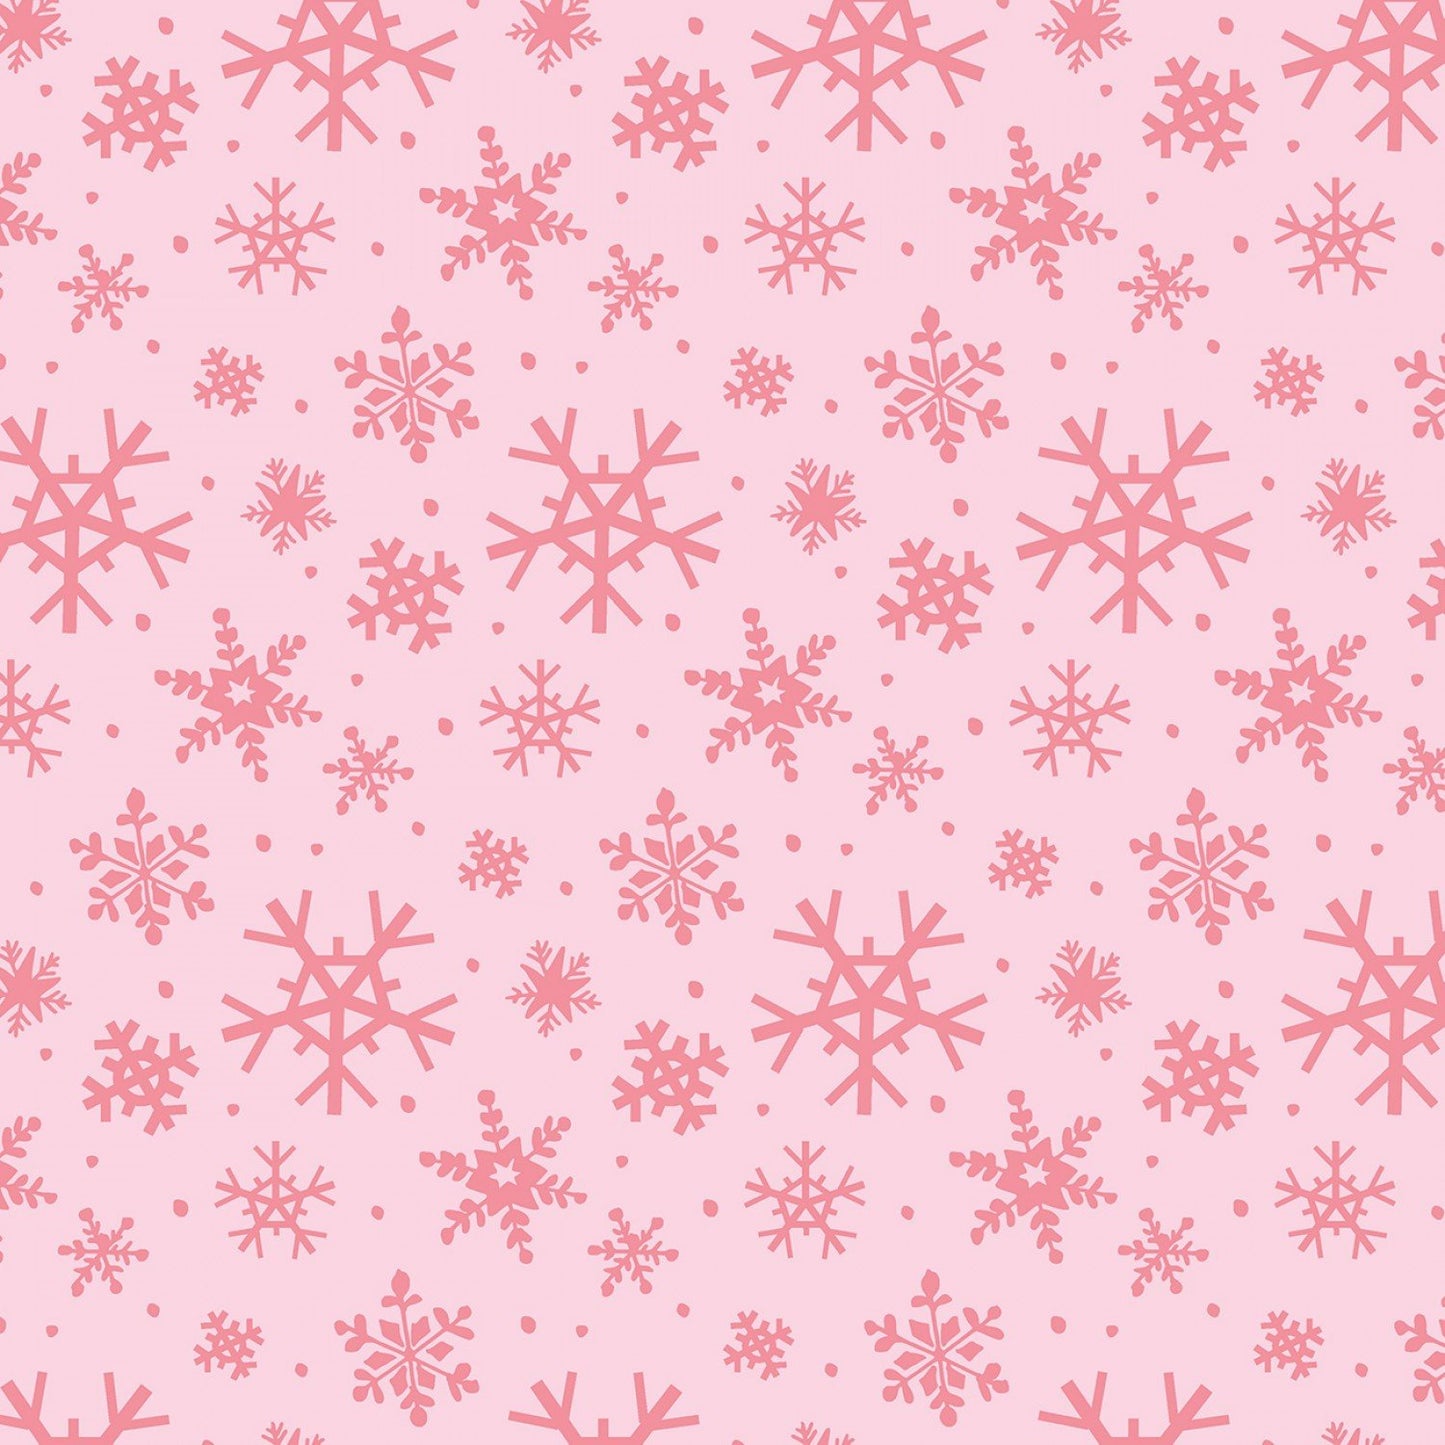 HOLLY HOLIDAY Pink Snowflake Yardage